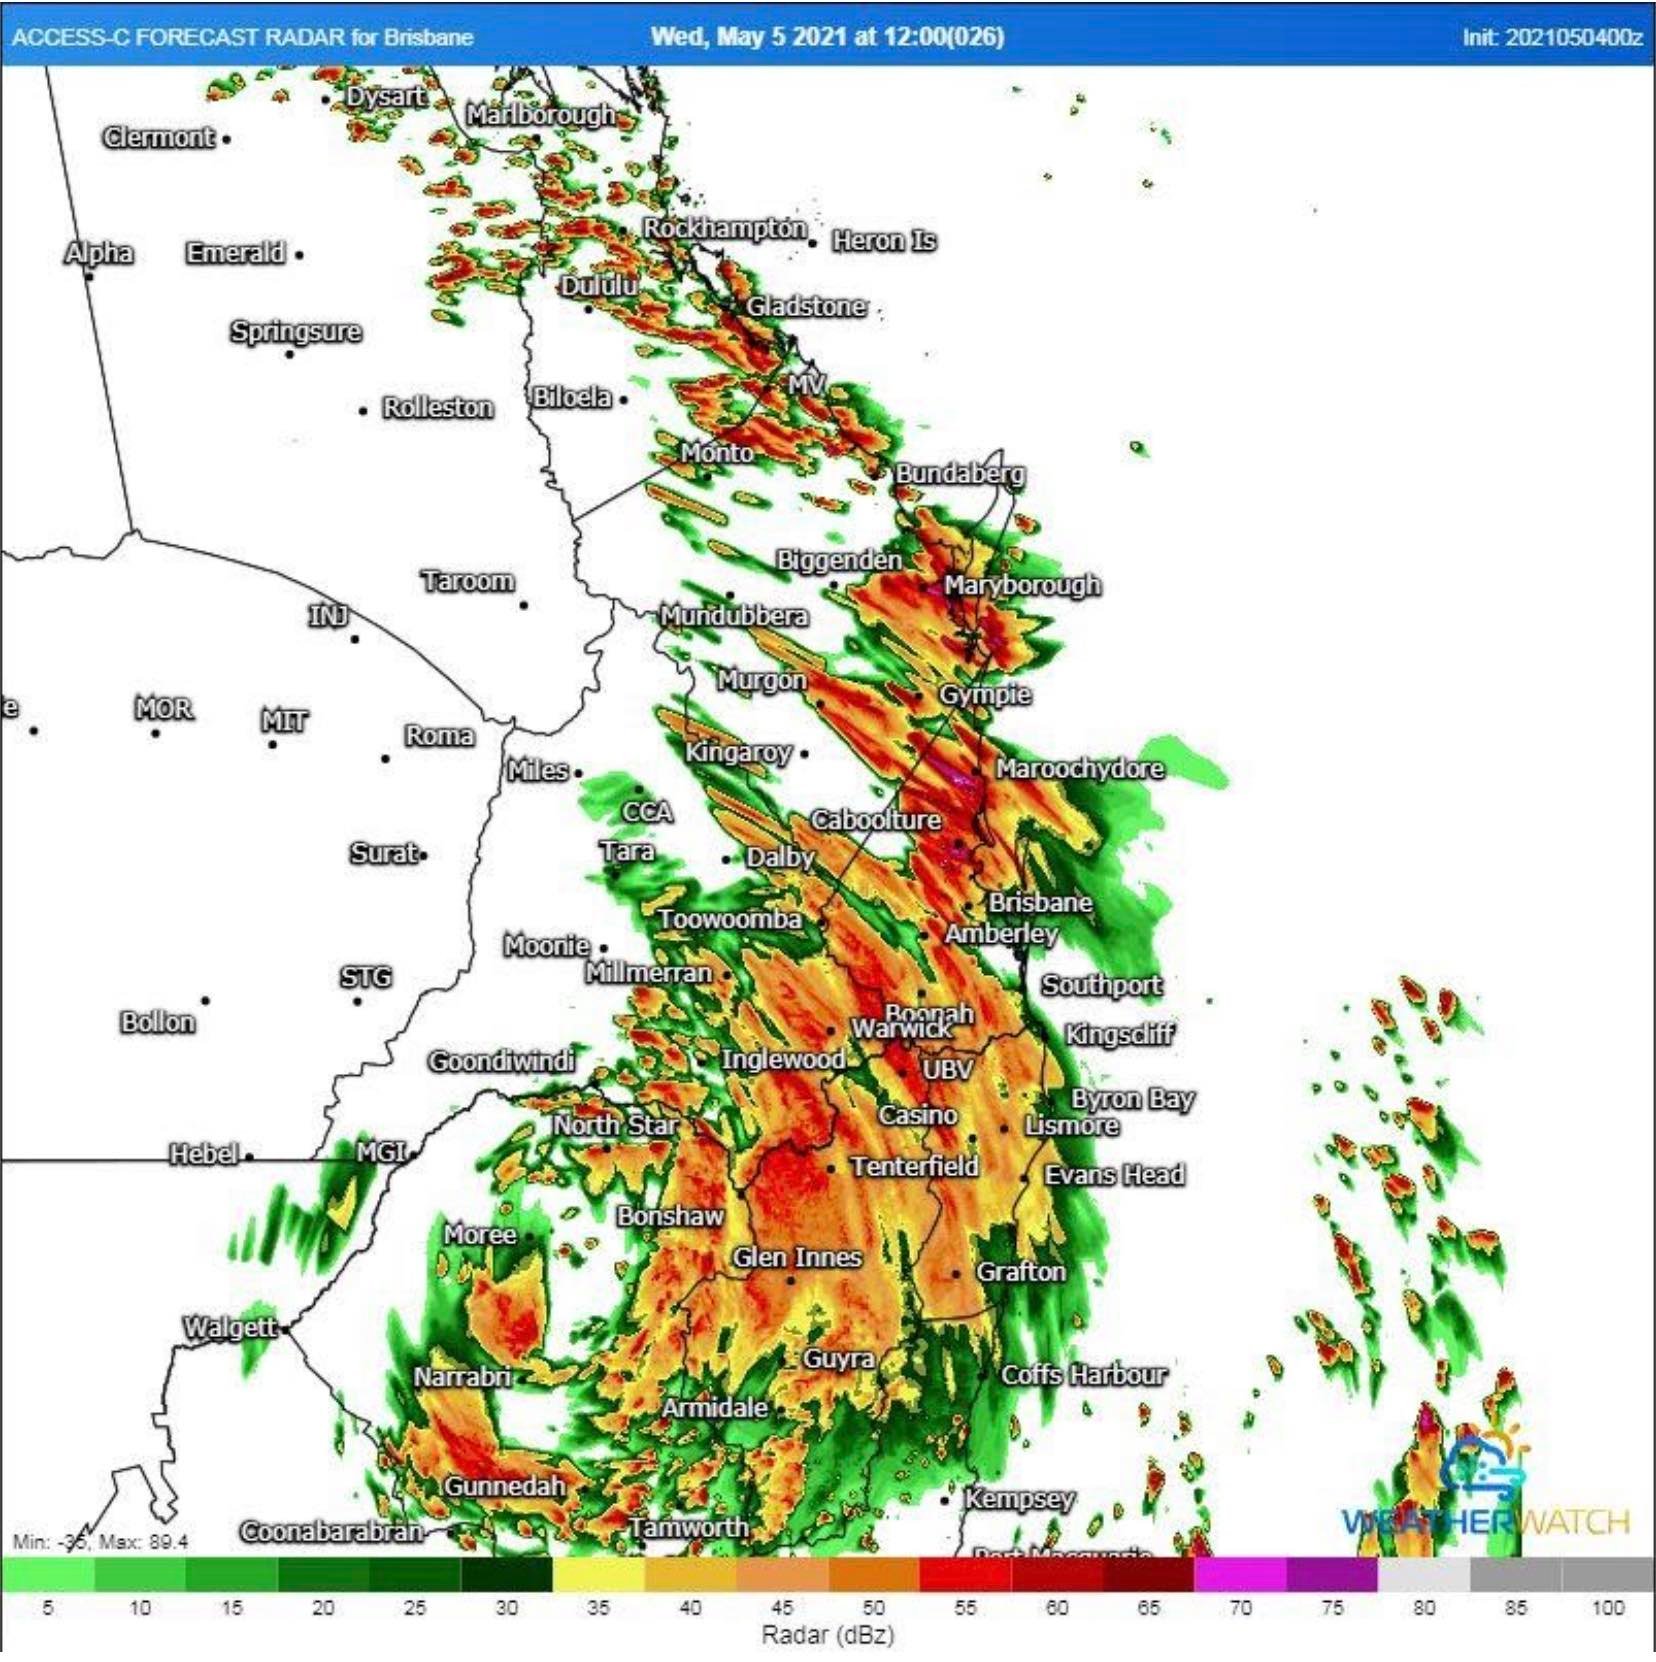 ACCESS C high resolution forecast radar for 12pm Brisbane, Wednesday 5/05/2021. Image via WeatherWatch Metcentre.